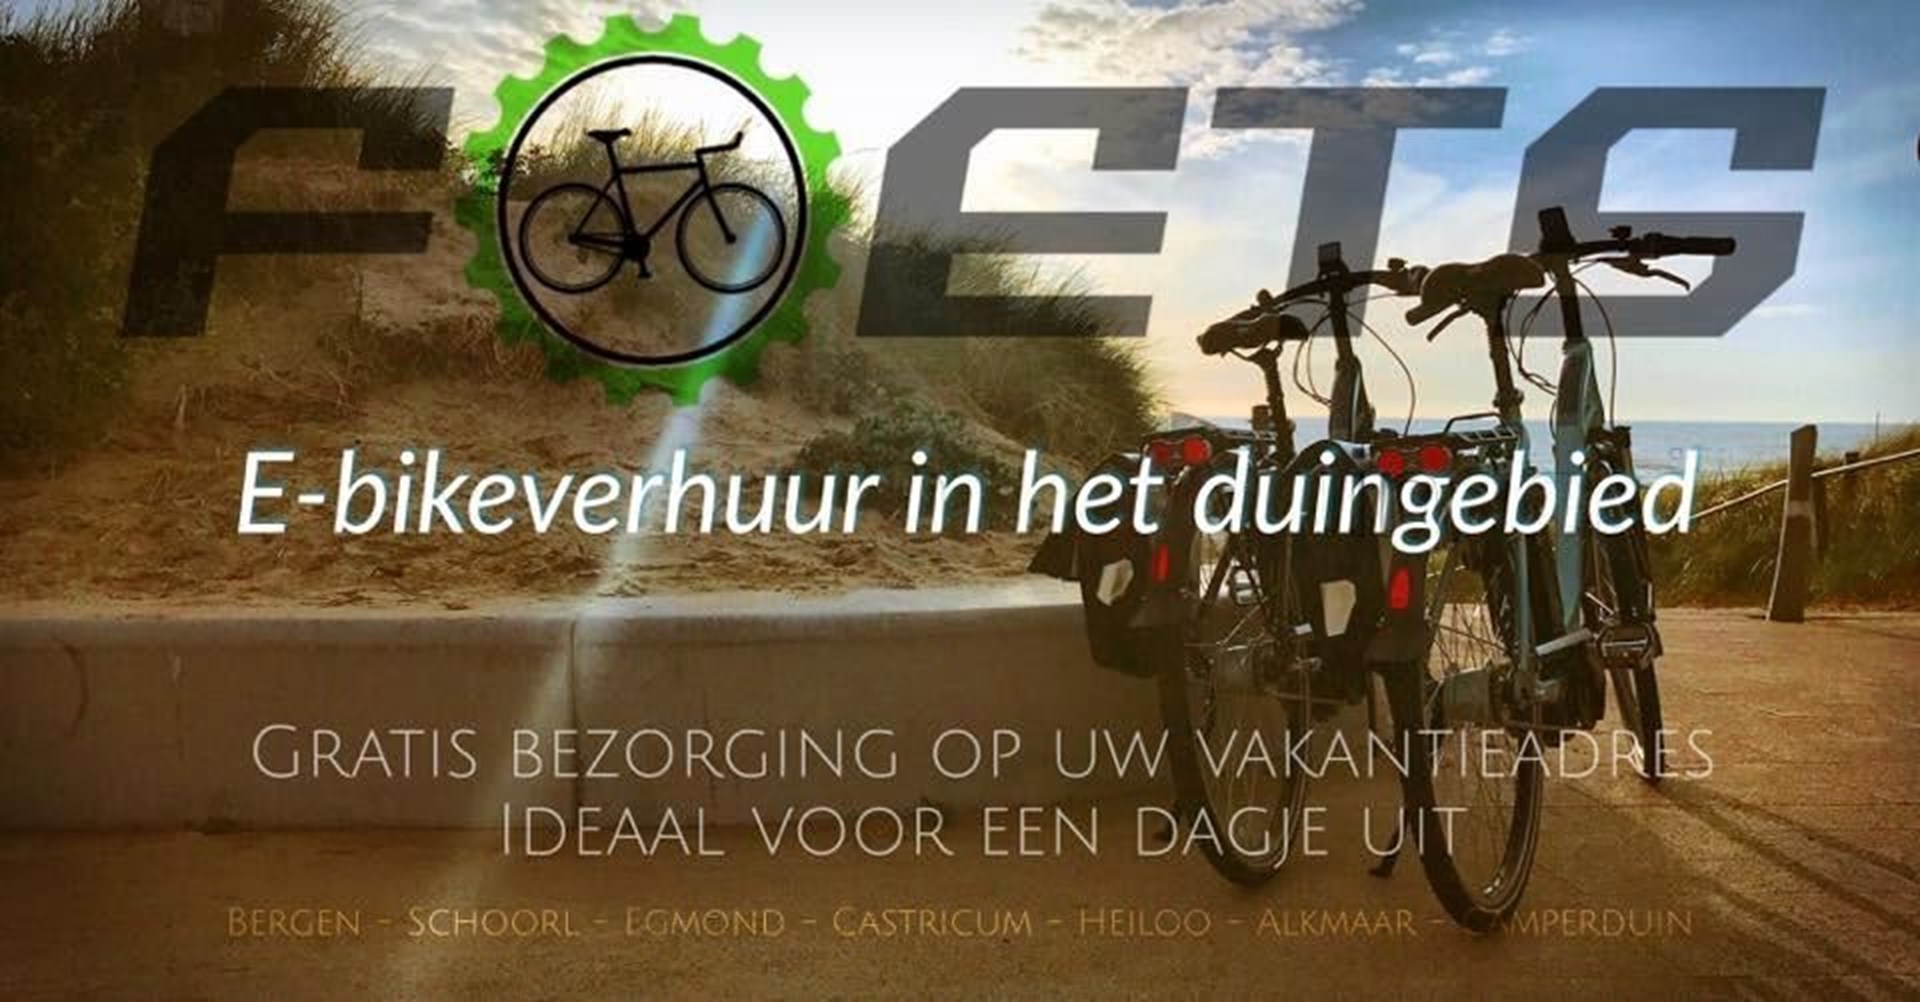 Foets E-Bike verhuur banner